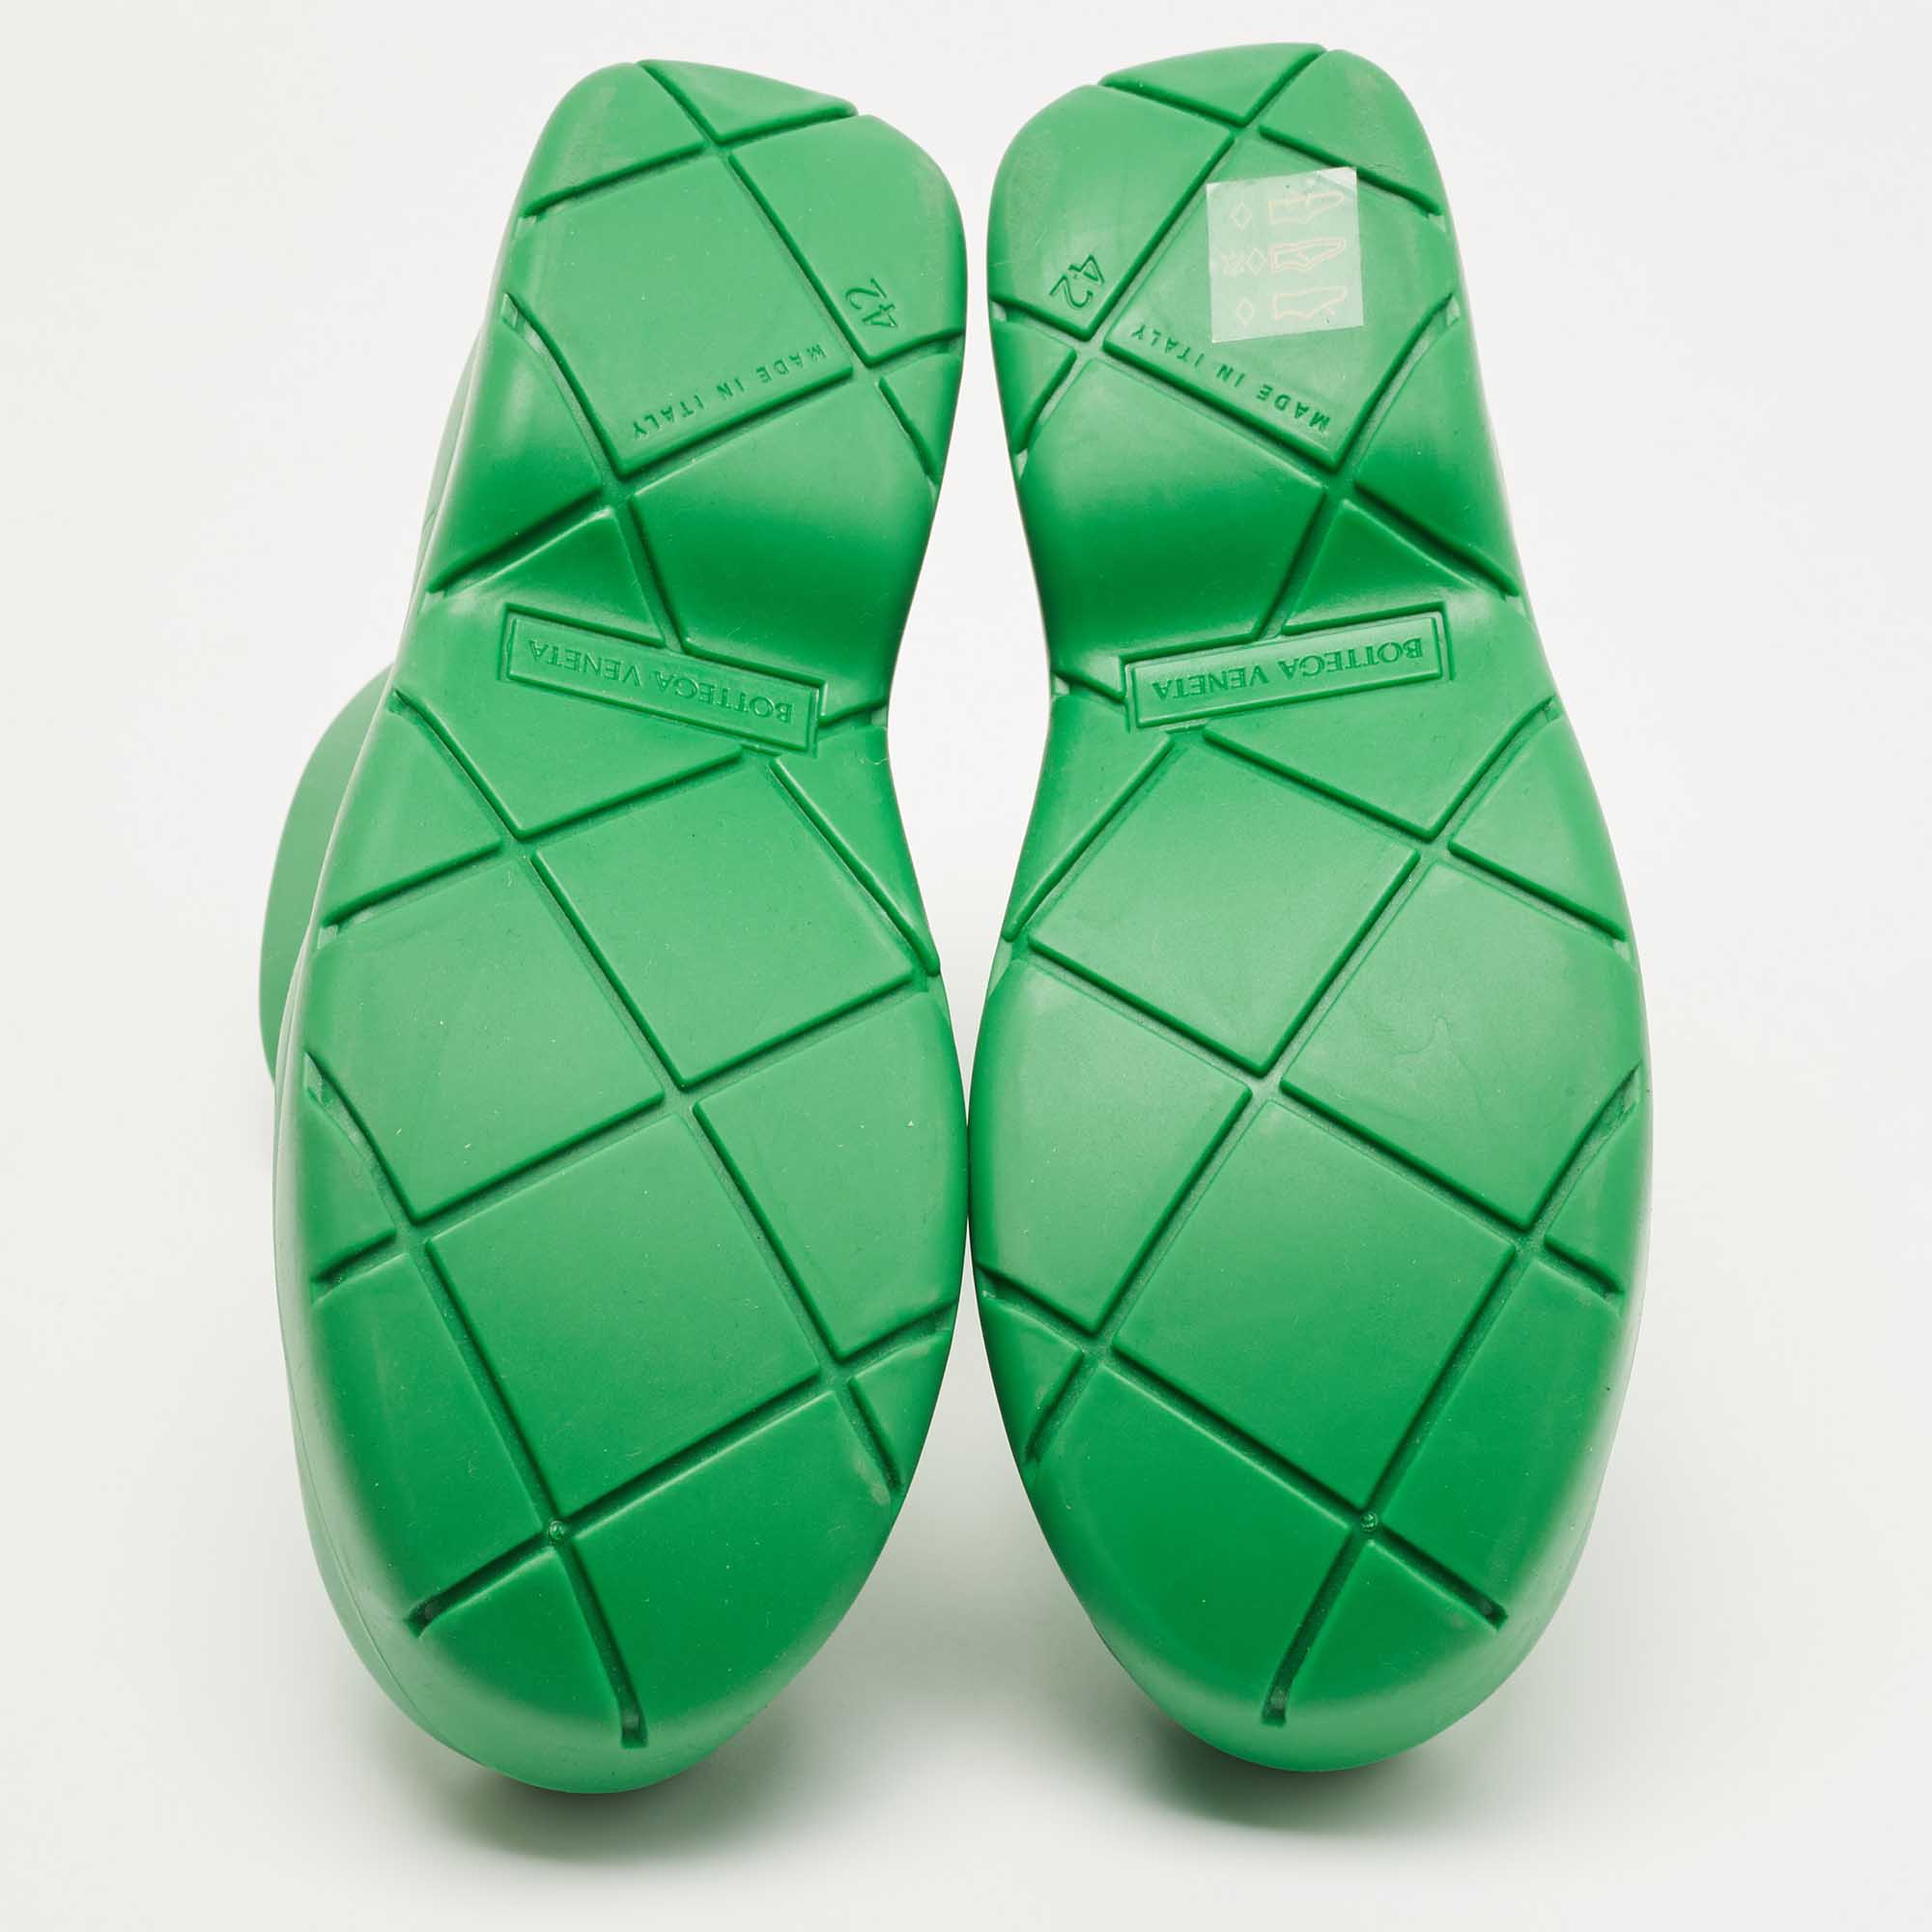 Bottega Veneta Green Rubber Puddle Ankle Boot Size 42